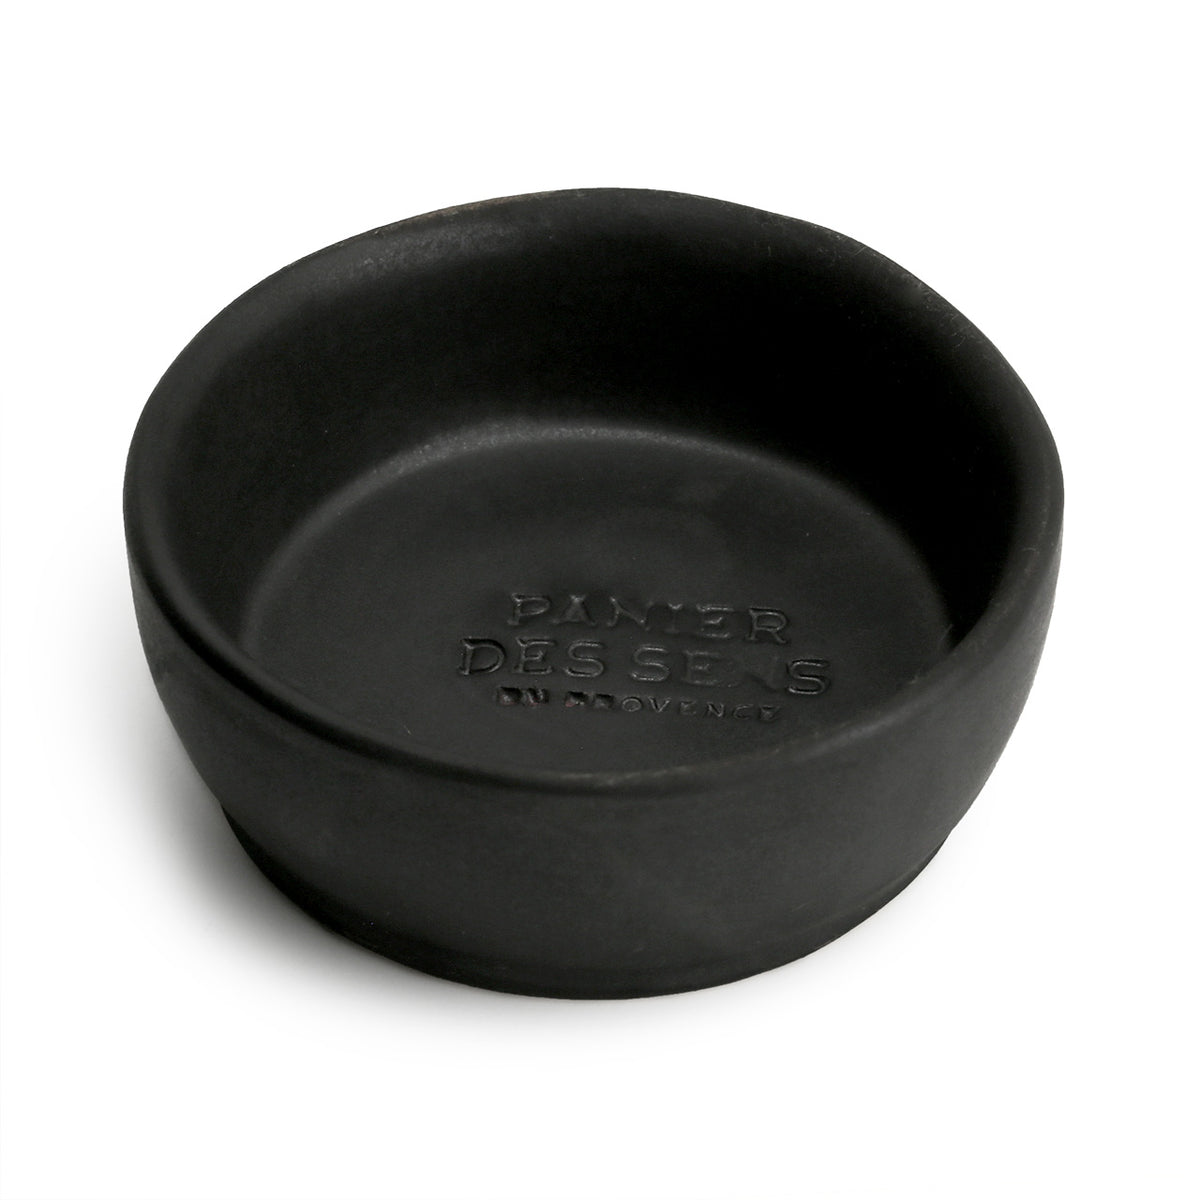 black terracotta shave soap bowl with logo impression inside the base